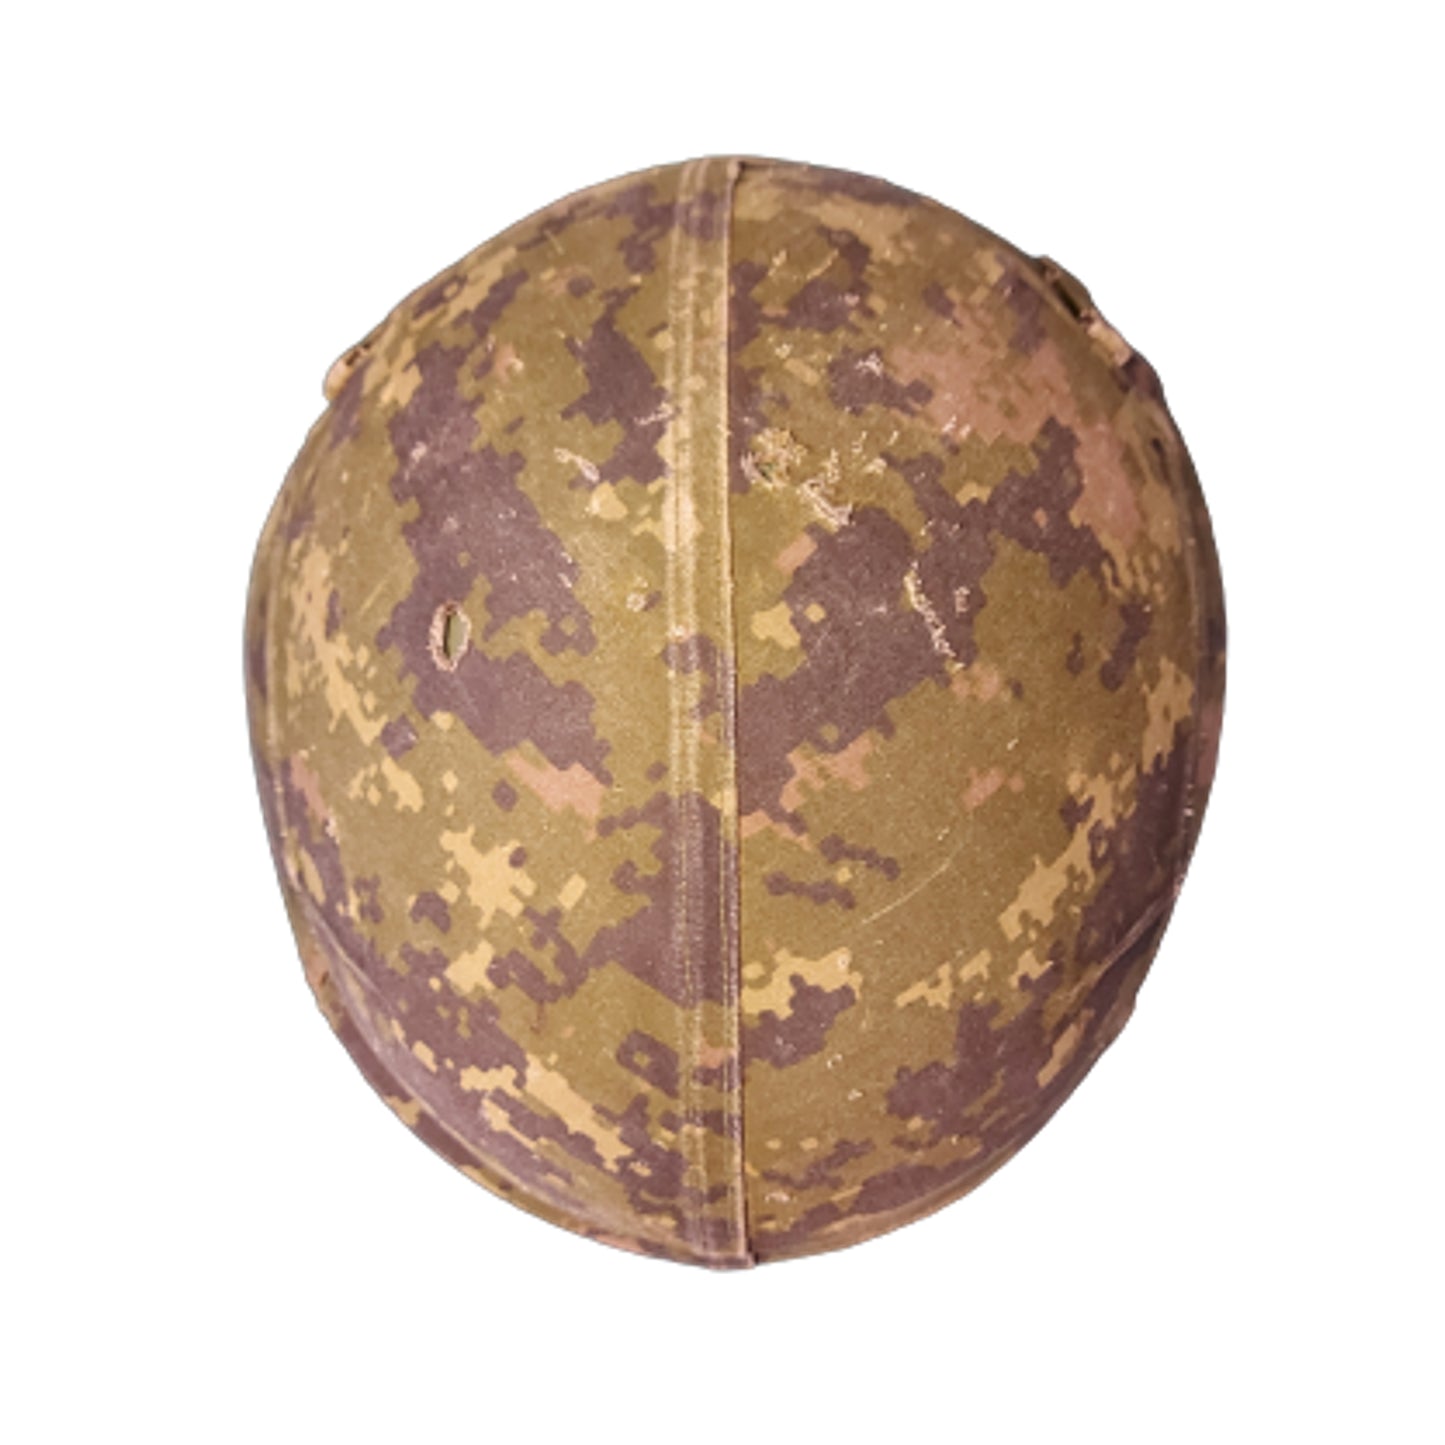 CAF Canadian Armed Forces PASGT Ballistic Helmet